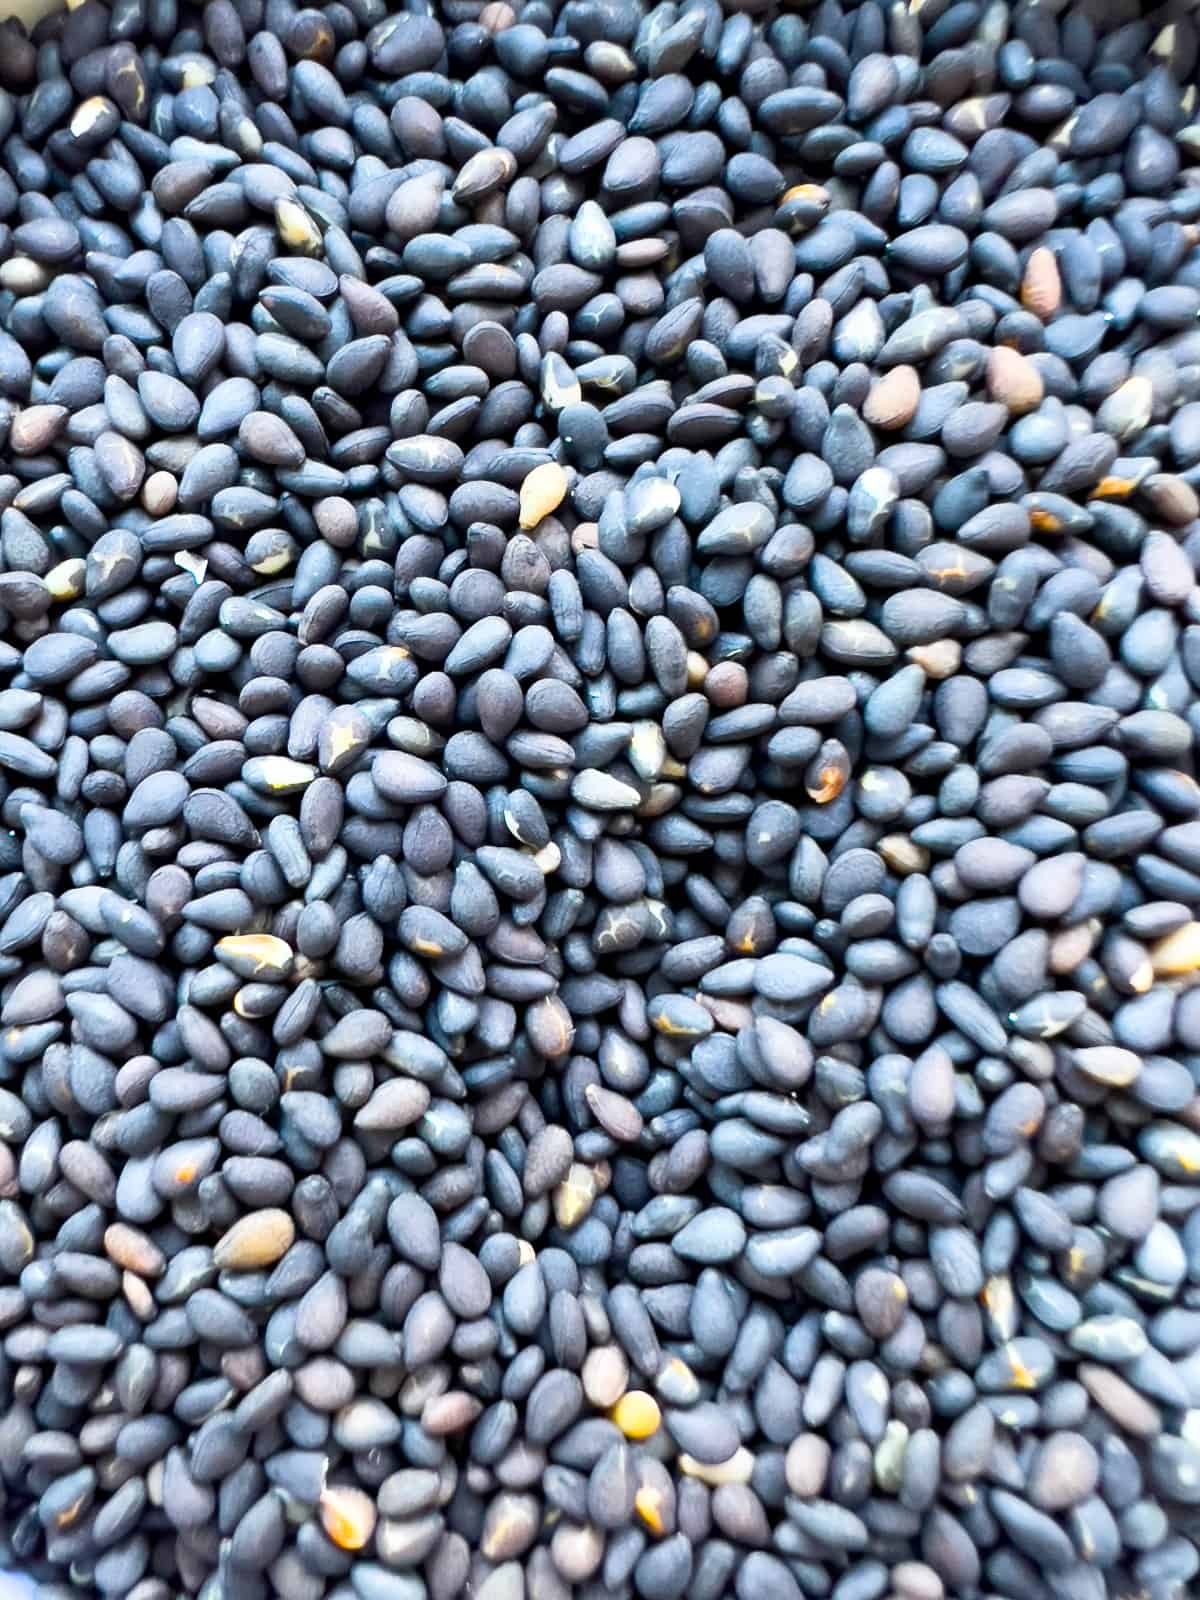 A close up image of black Japanese roasted sesame seeds.